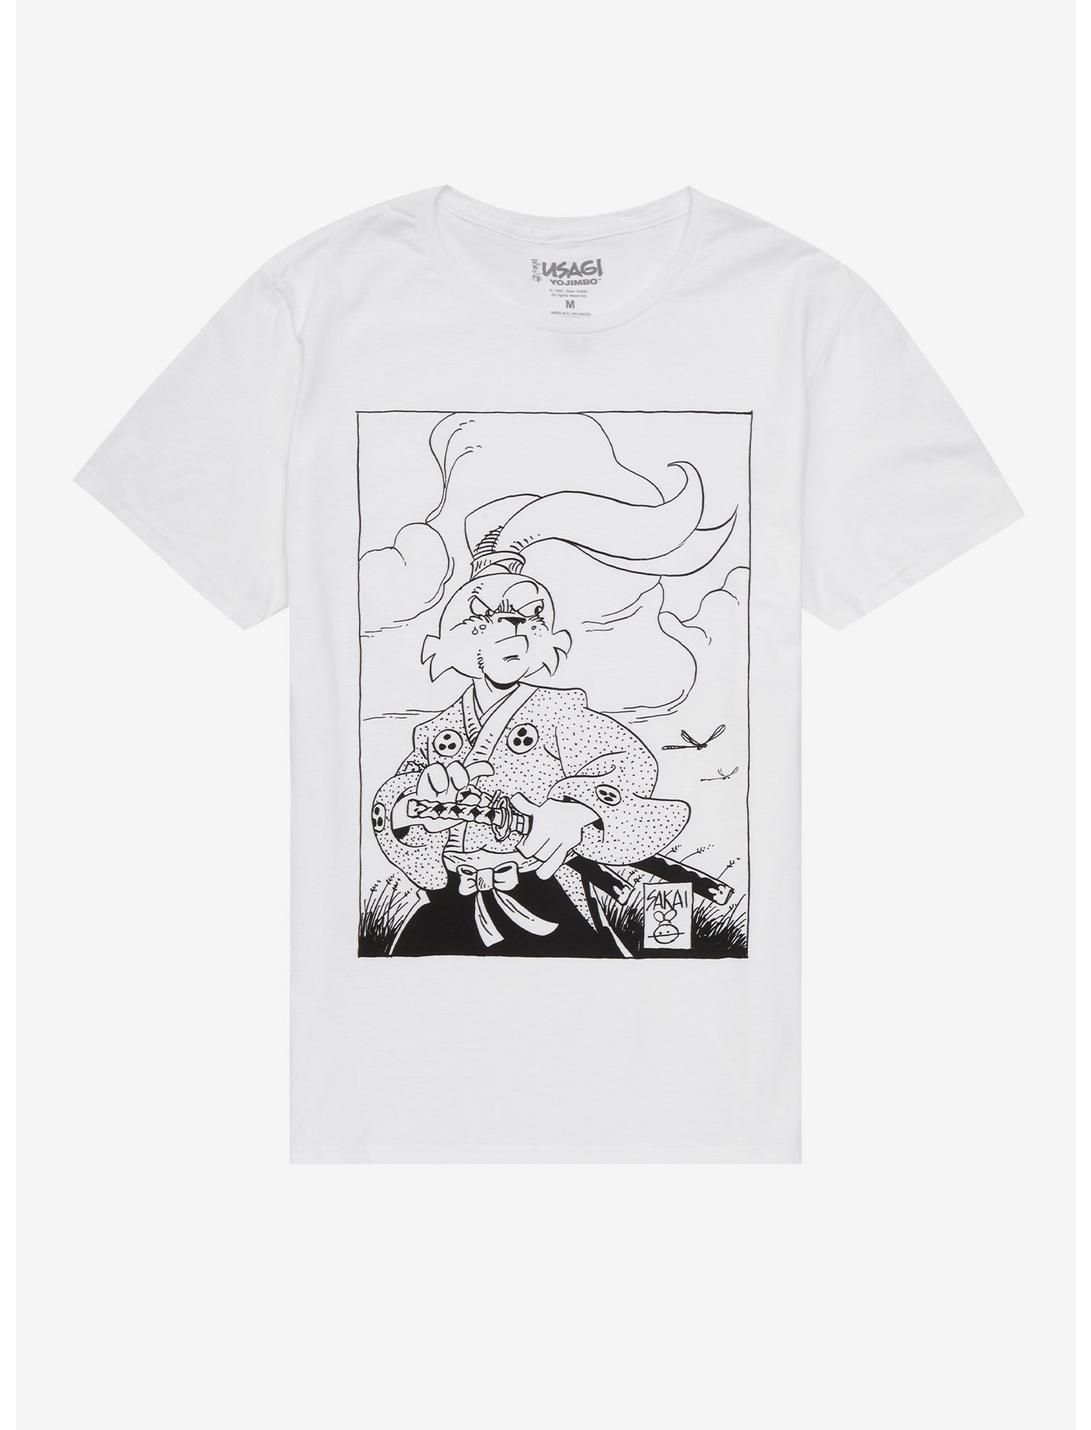 Usagi Yojimbo Line Art T-Shirt | Hot Topic